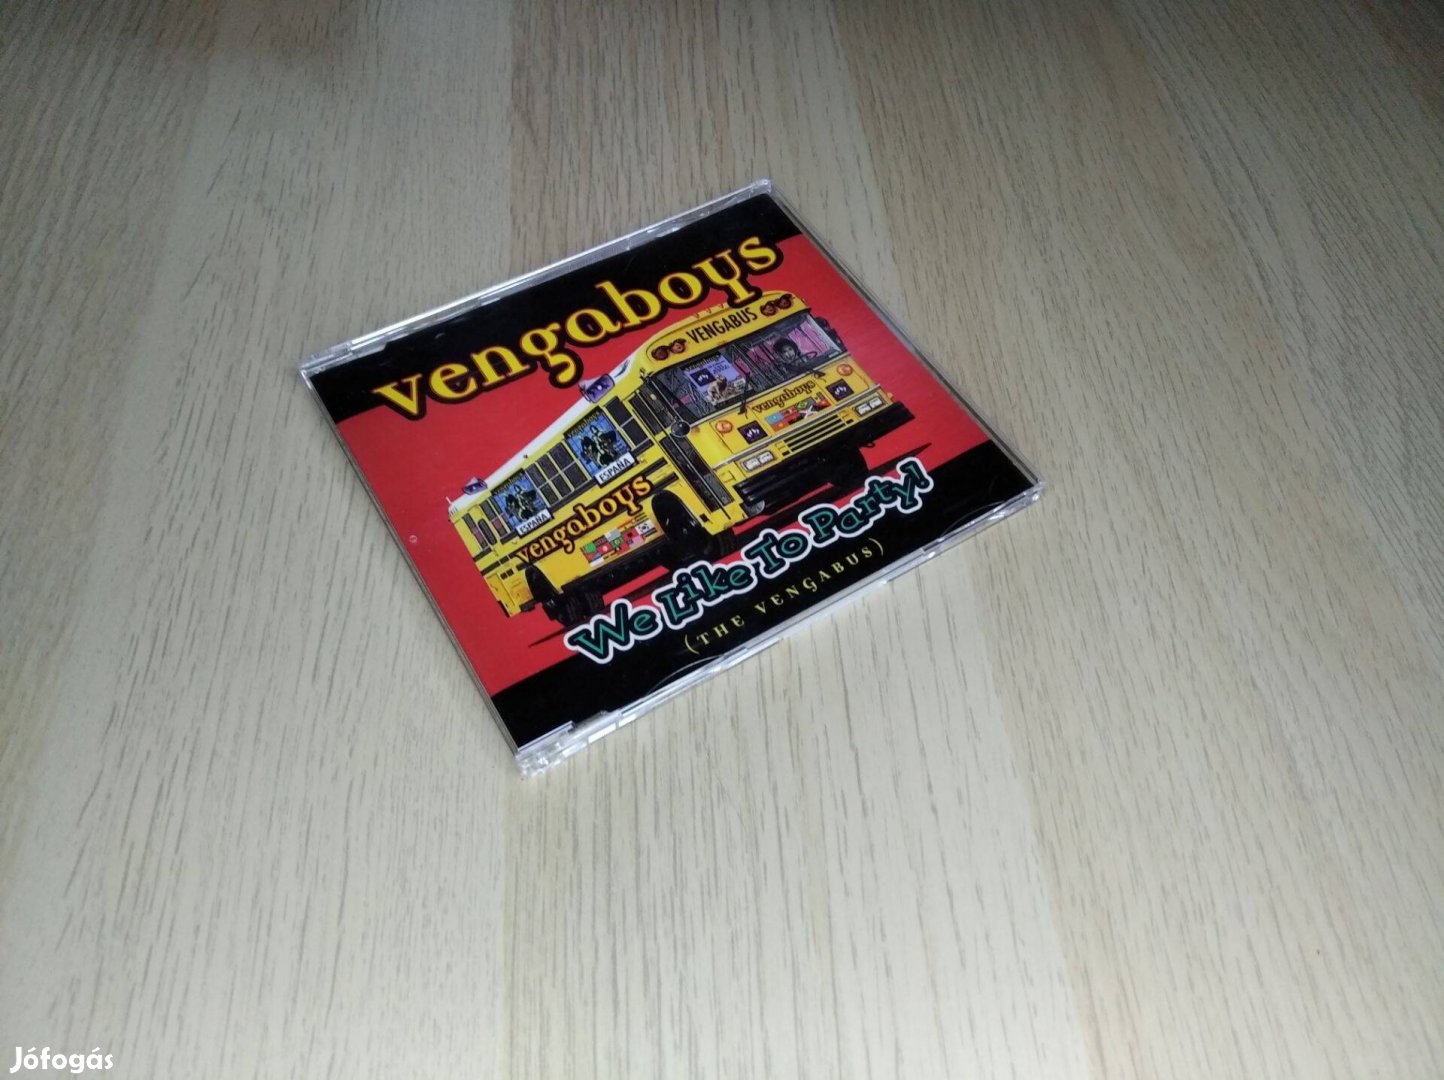 Vengaboys - We Like To Party! (The Vengabus) Maxi CD 1998